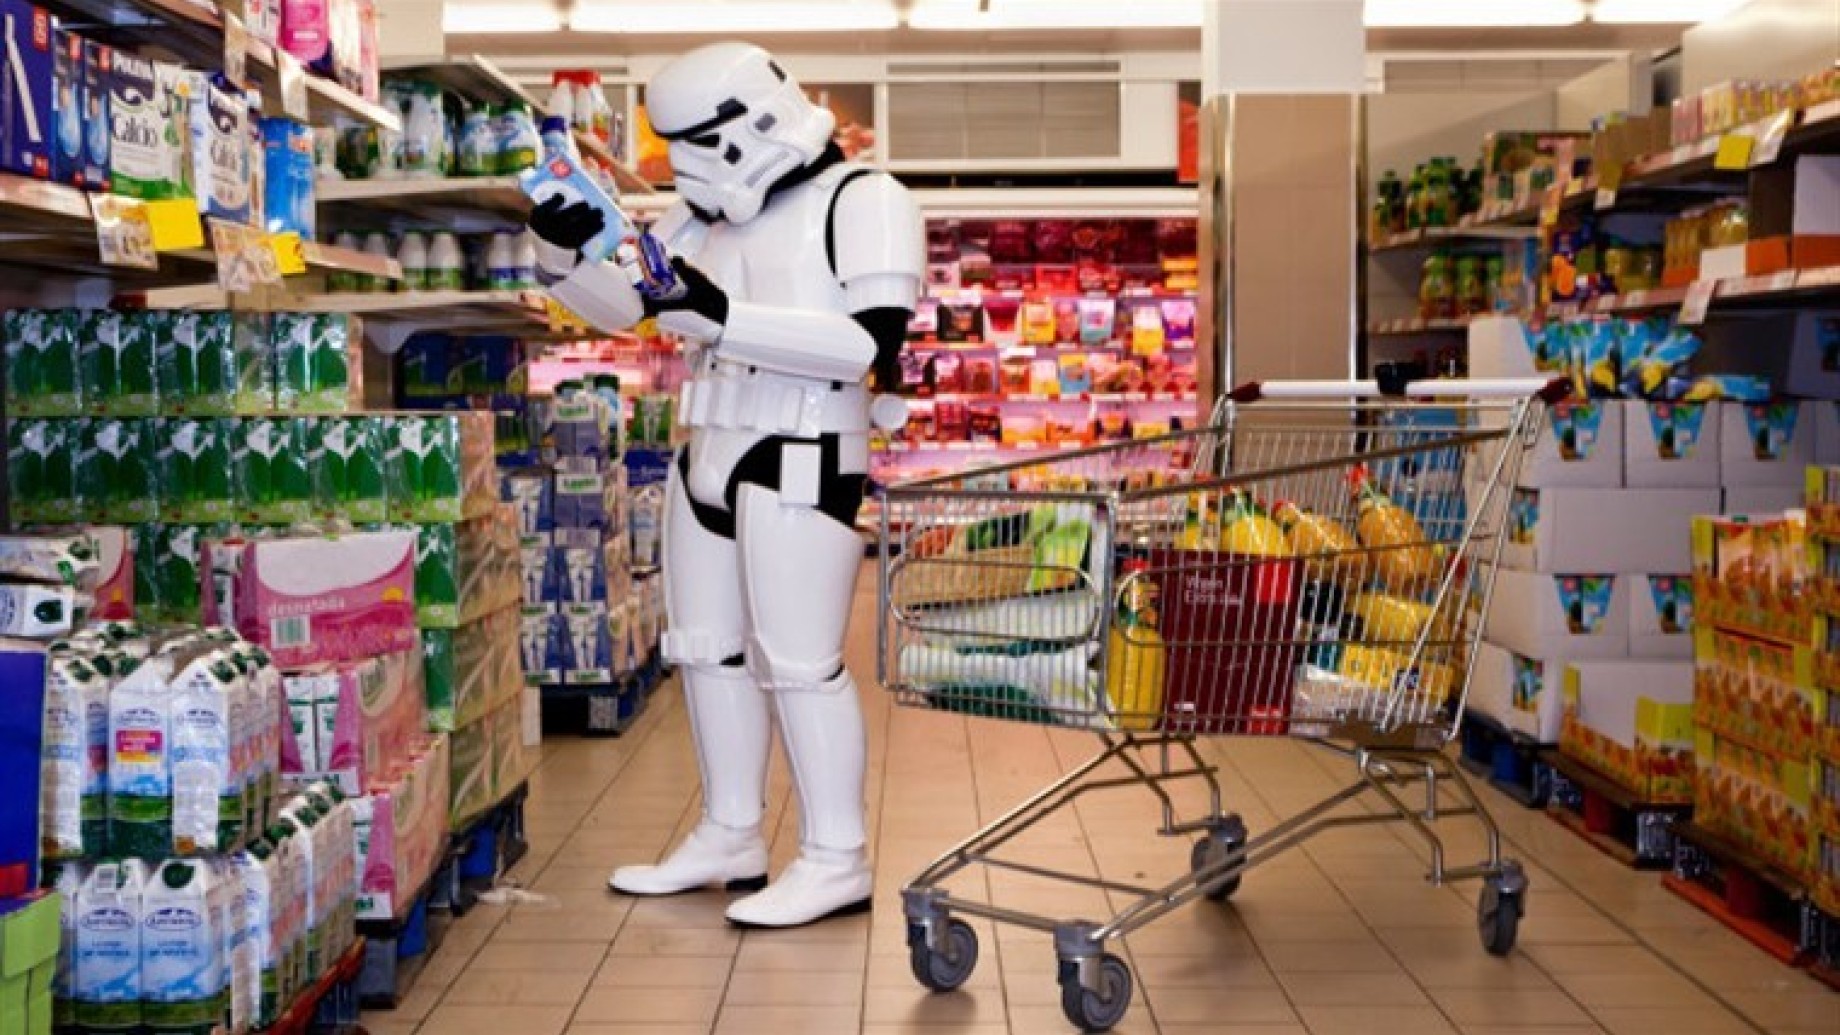 stormtrooper-star-wars-foto-divertenti-the-other-side-jorge-perez-higuera_760x430